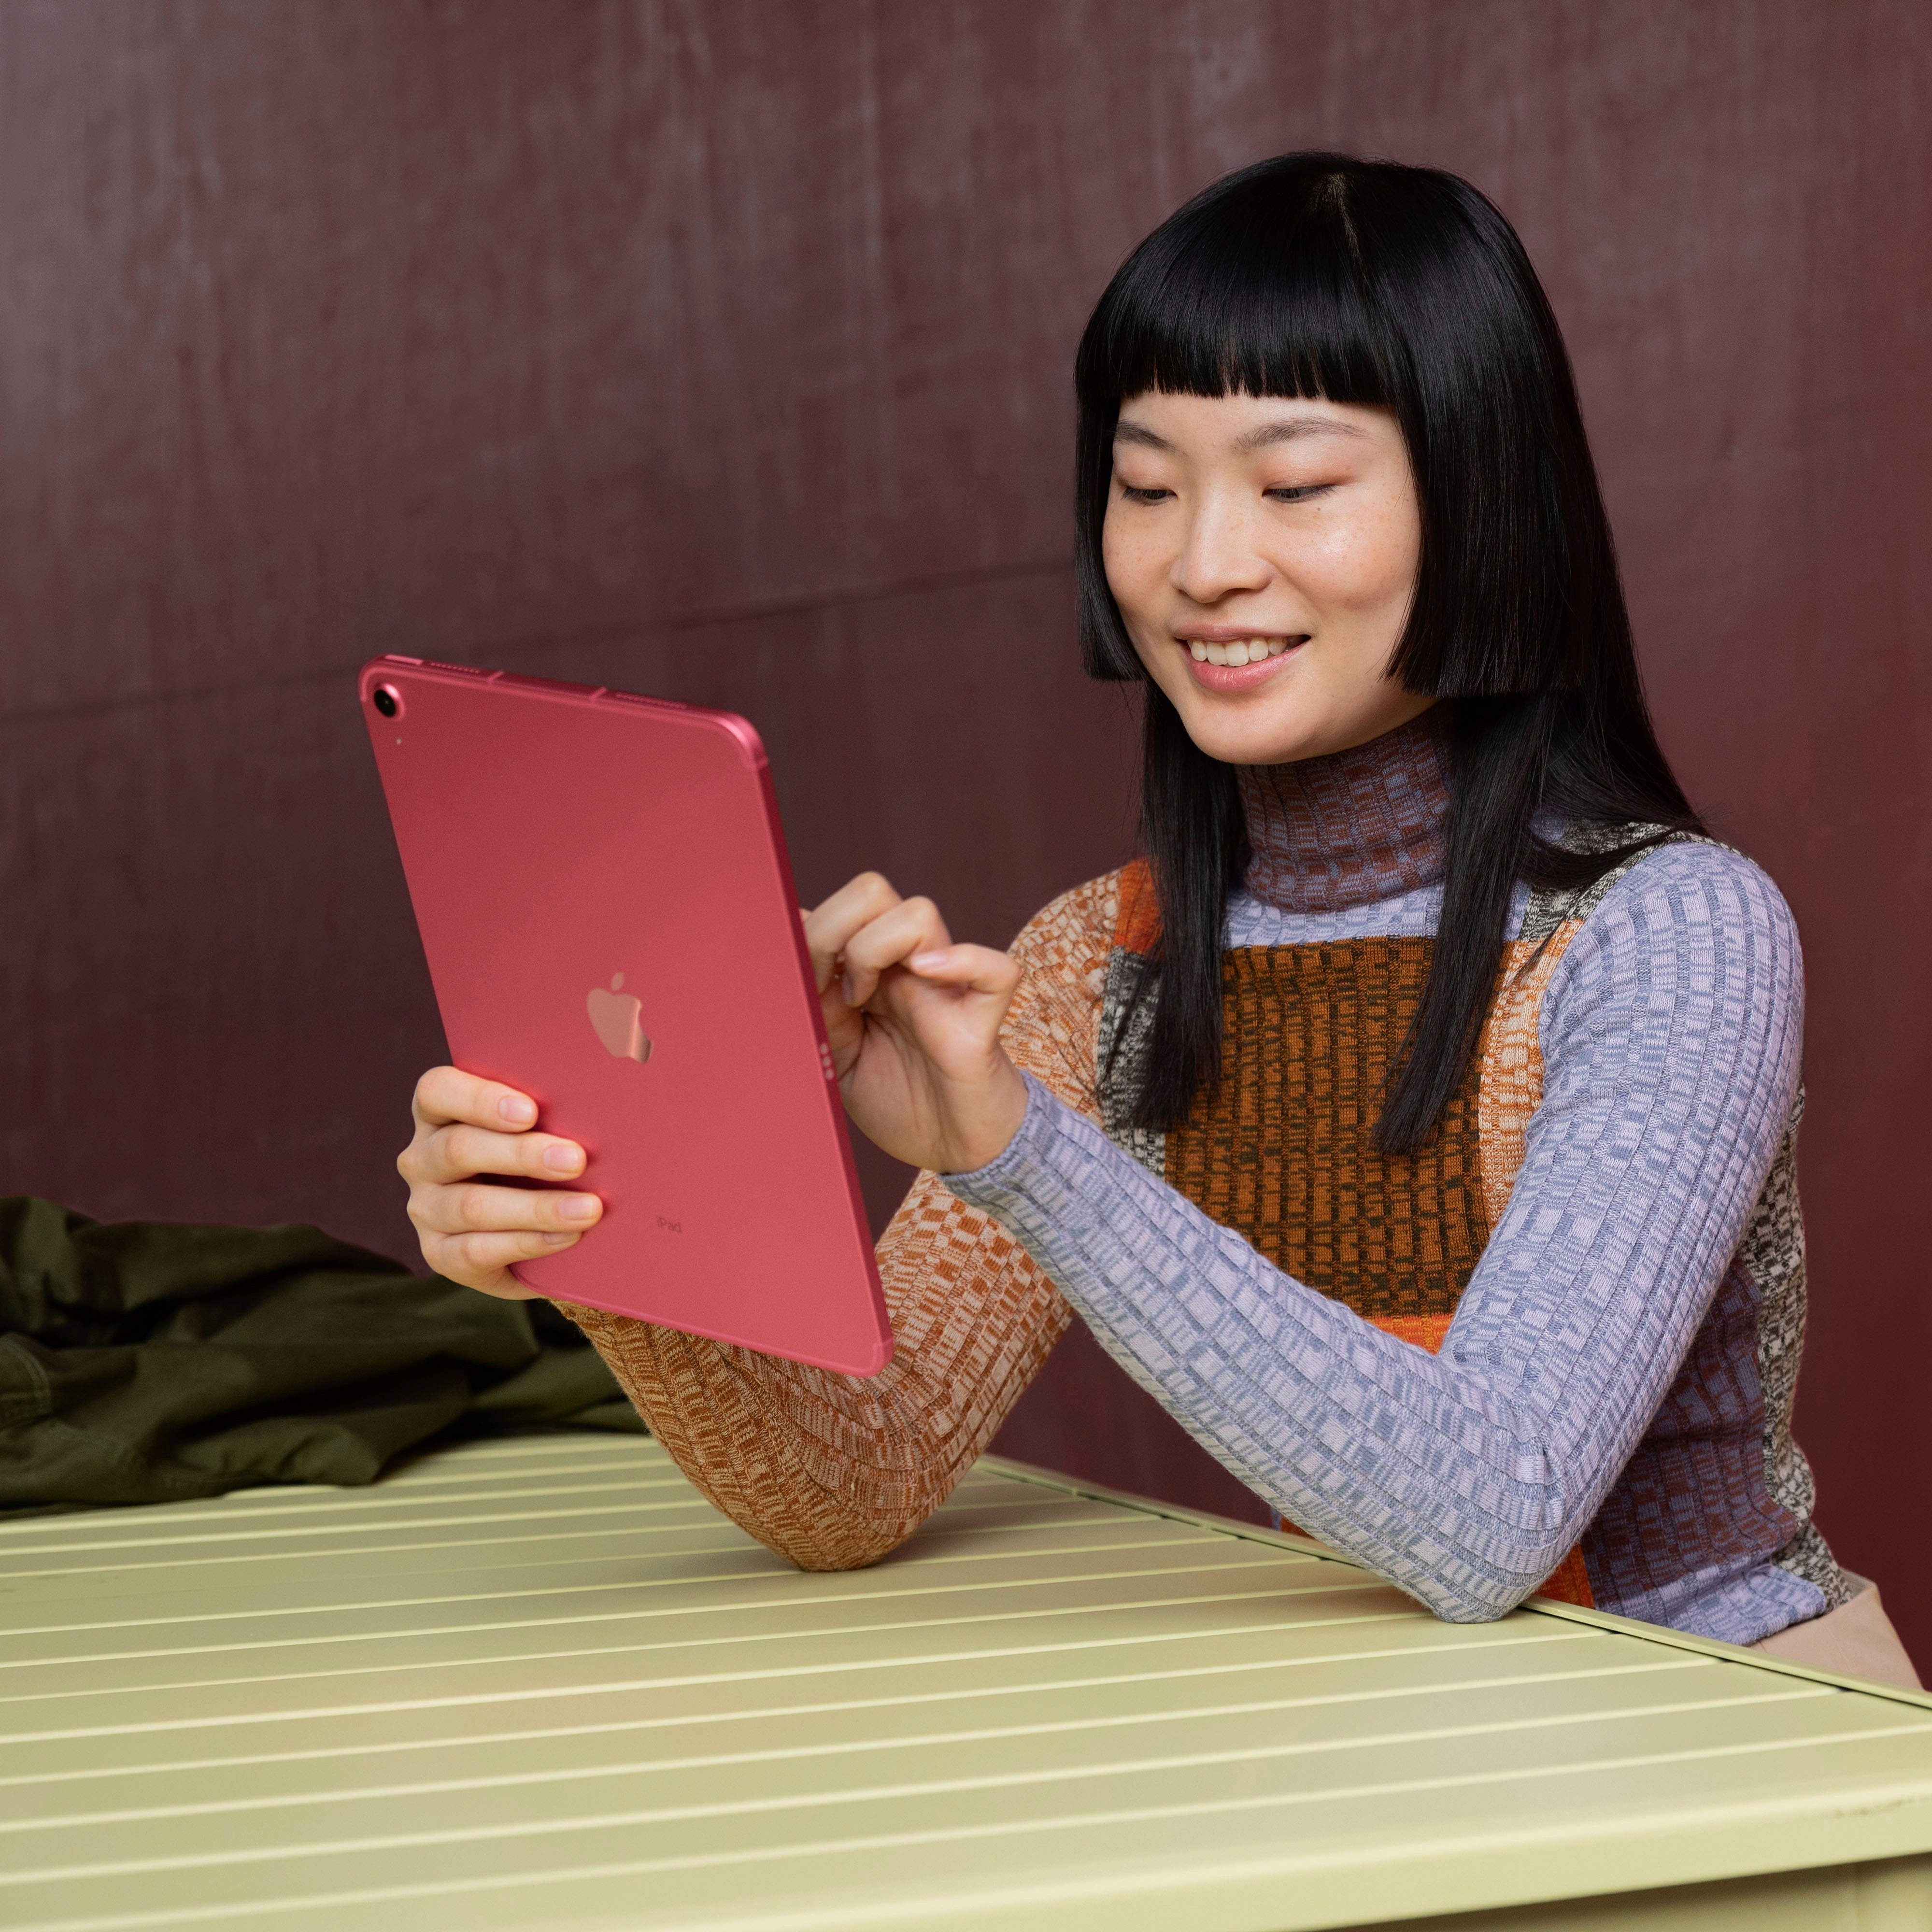 2022 Wi-Fi GB, 64 Apple pink iPad (10 iPadOS) (10,9", Tablet Generation)